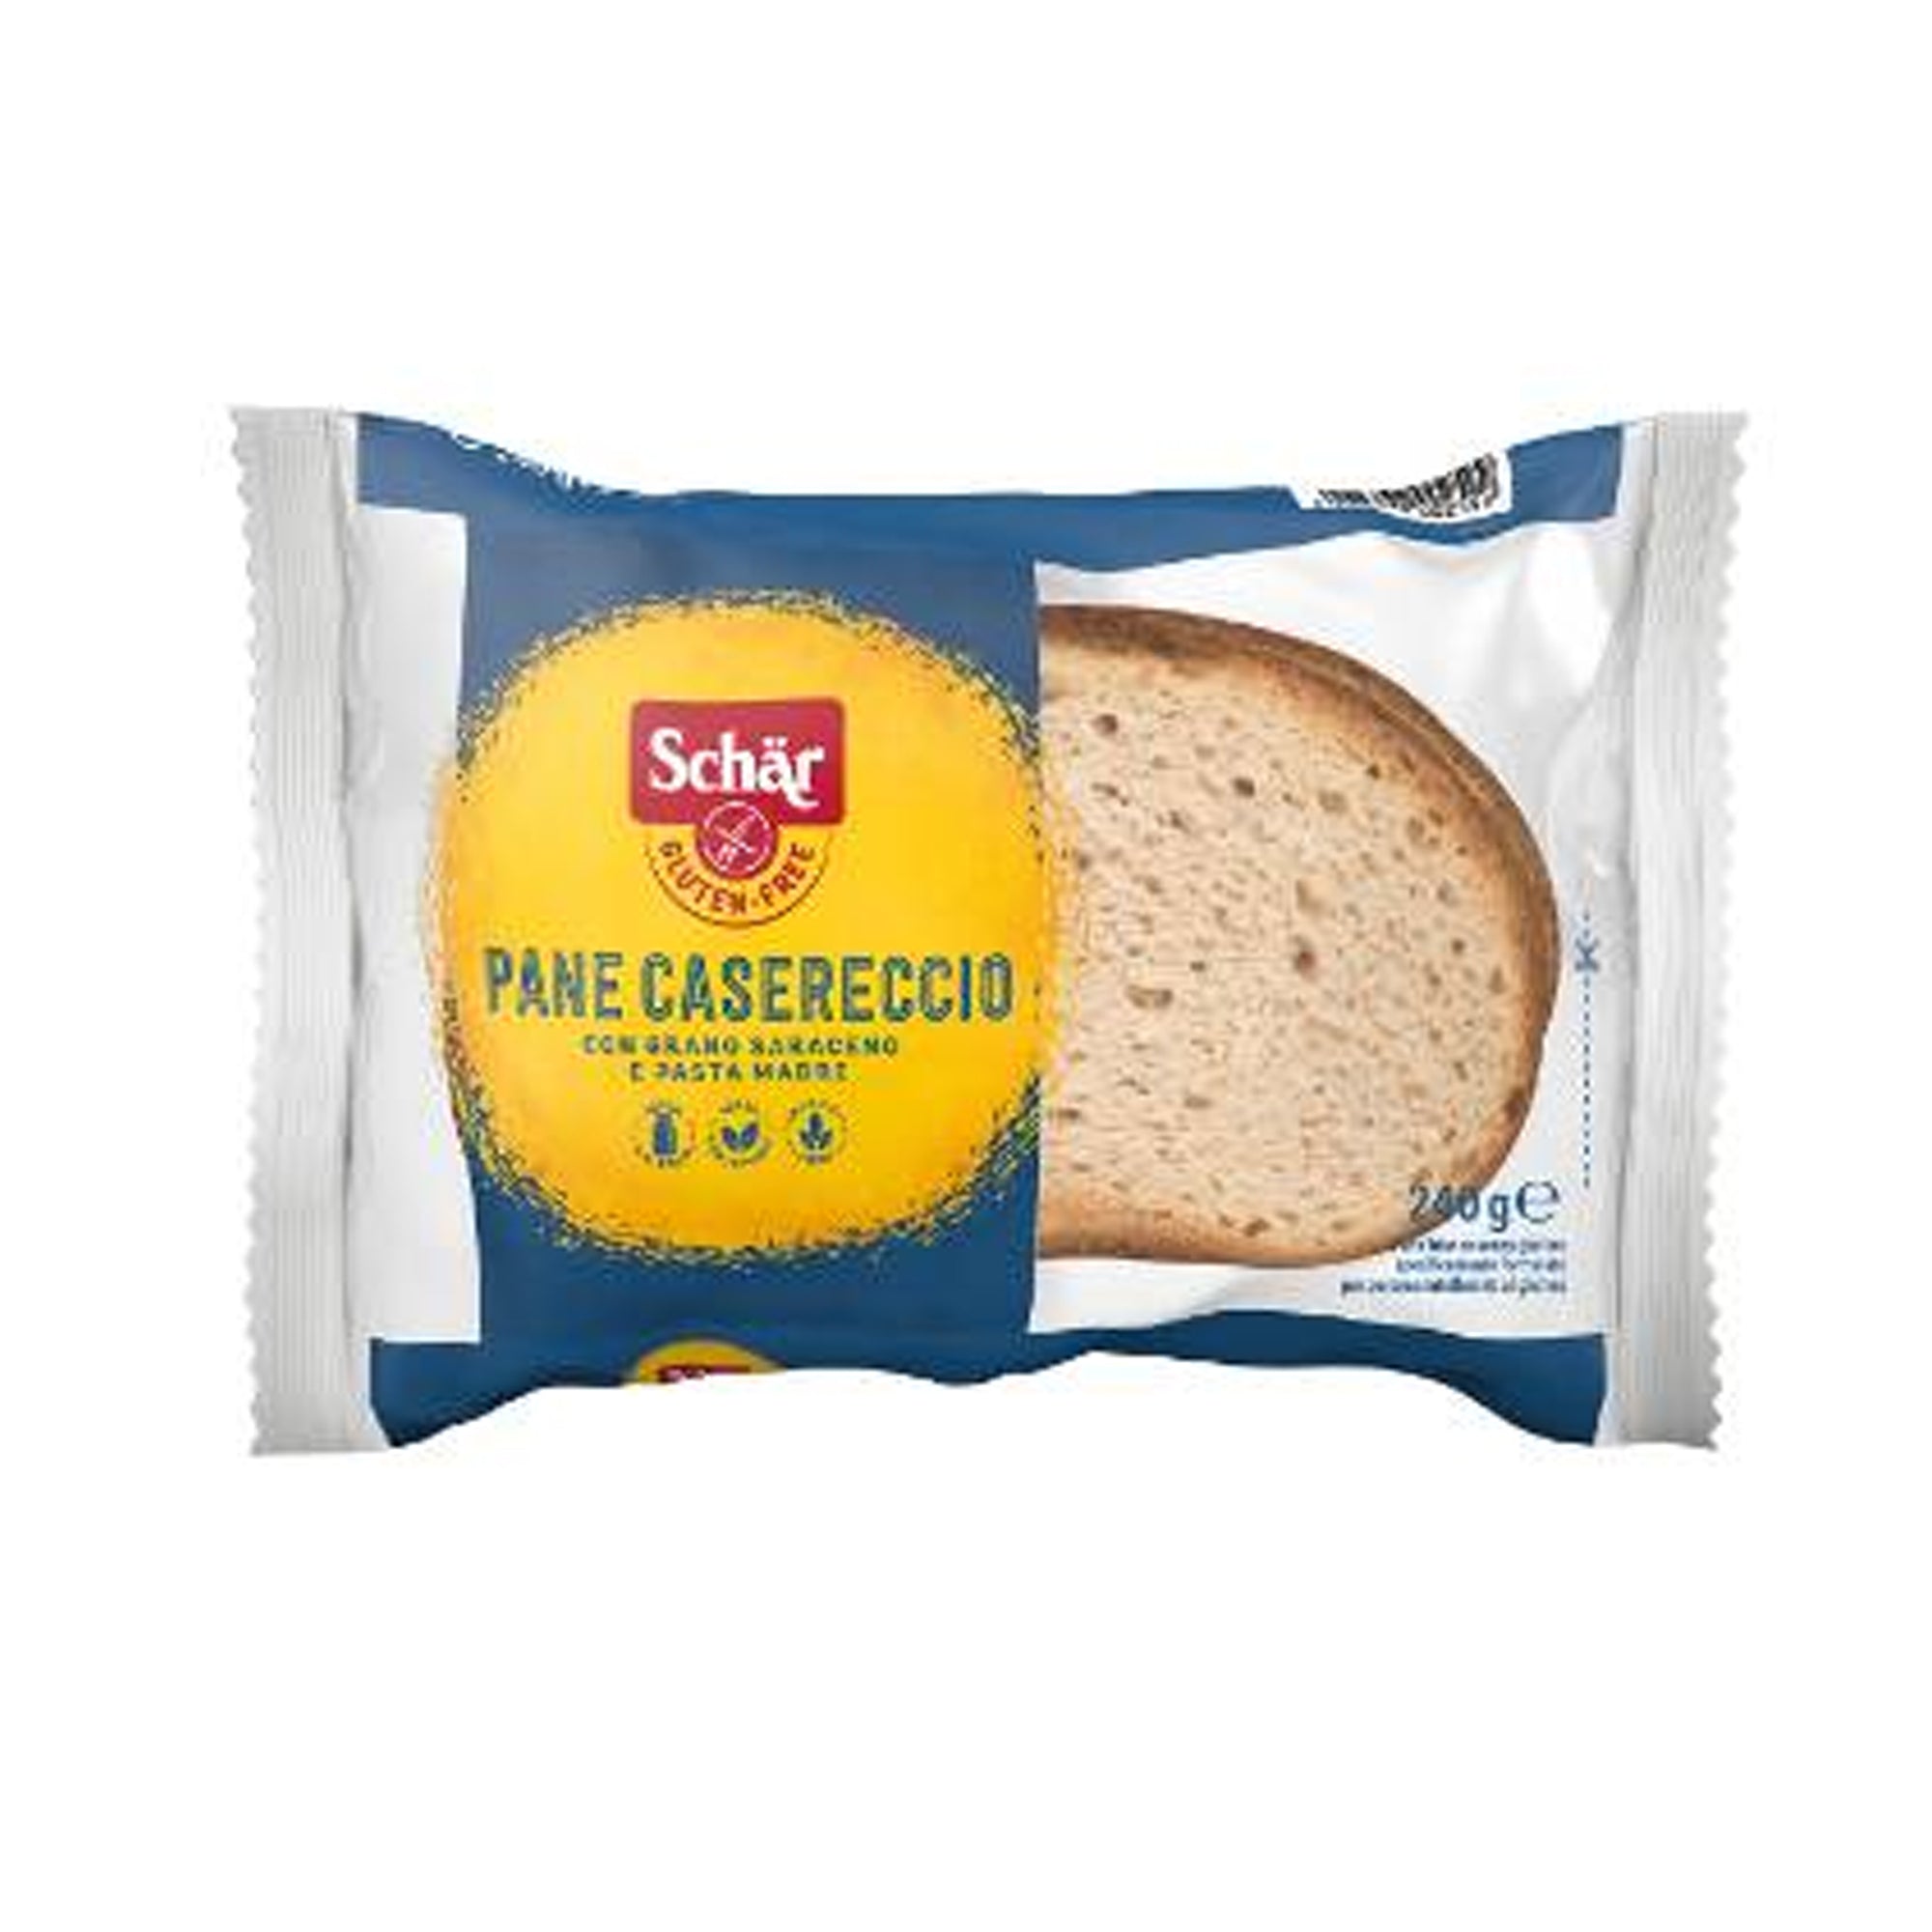 Schar Pane Casereccio Bread 240g